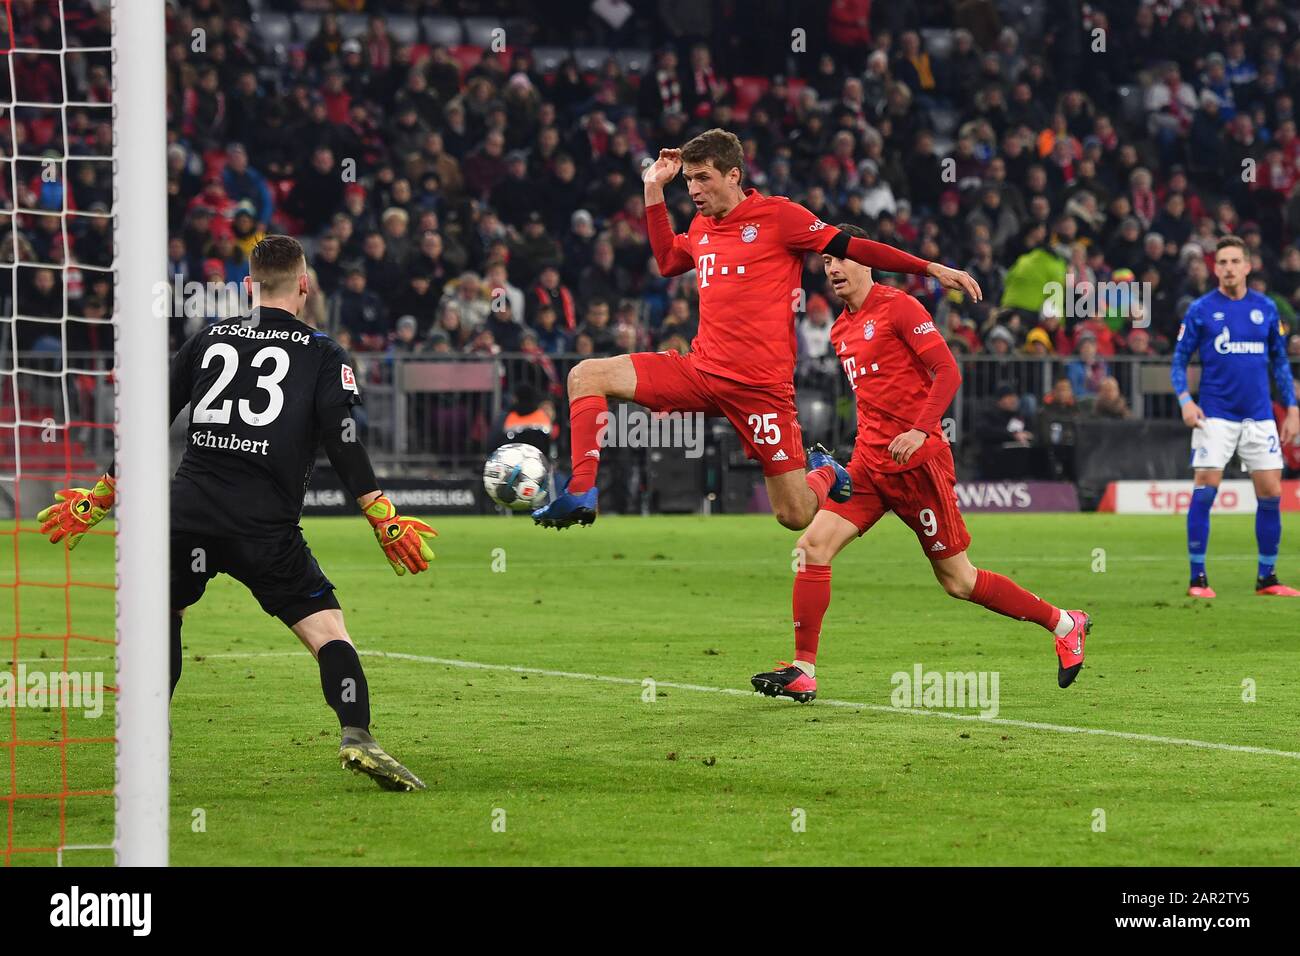 Thomas MUELLER (MULLER, FC Bayern Munich) scores the goal for 2-0 ...